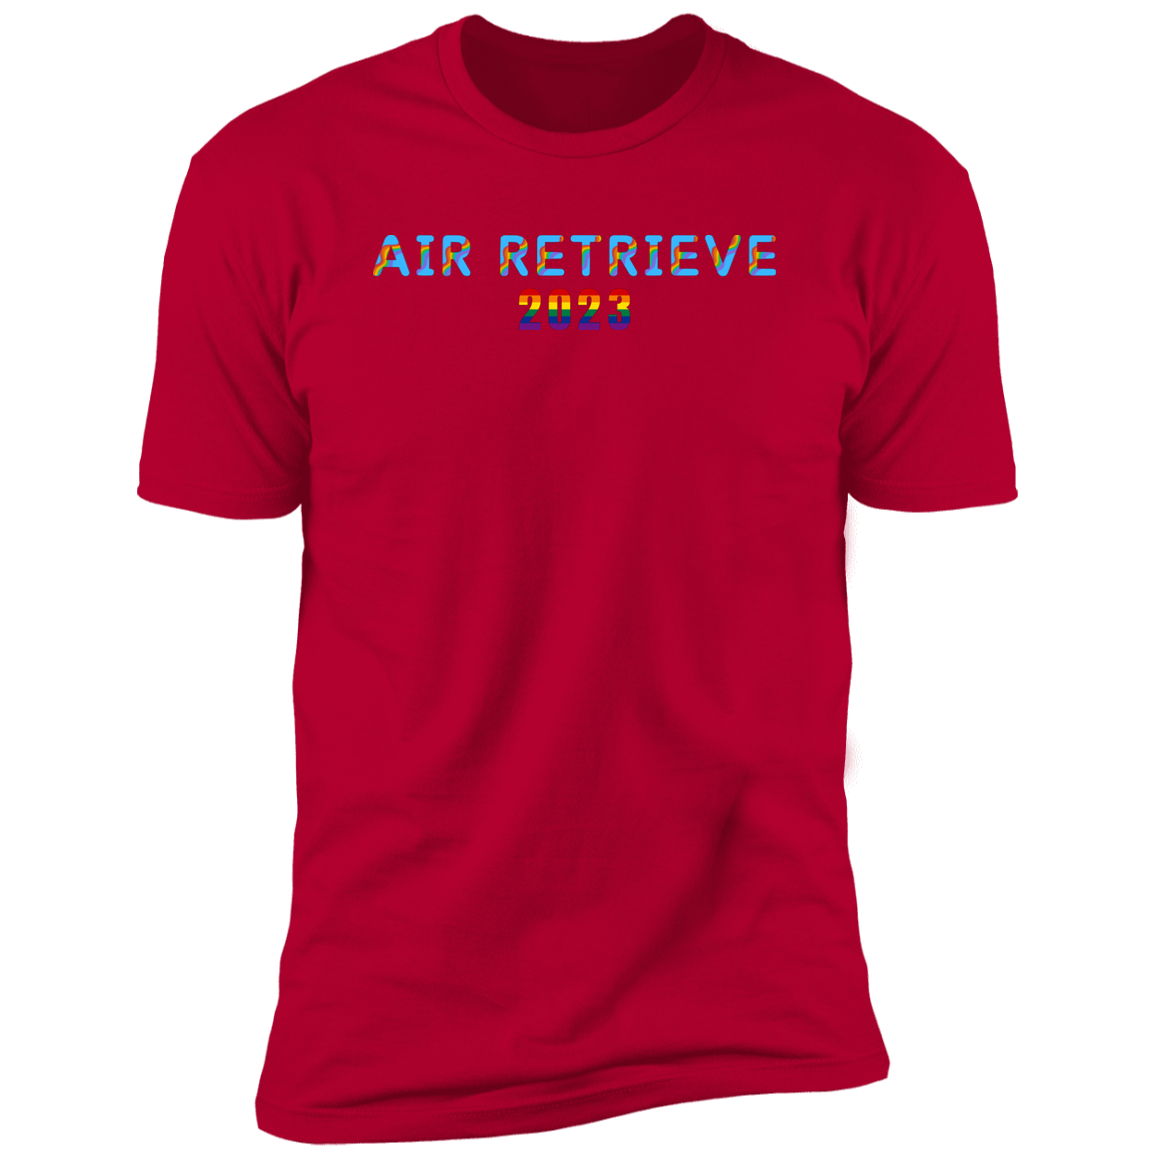 Air Retrieve 2023 Pride Dock diving t-shirt, dog pride air retrieve dock diving shirt for humans, in red